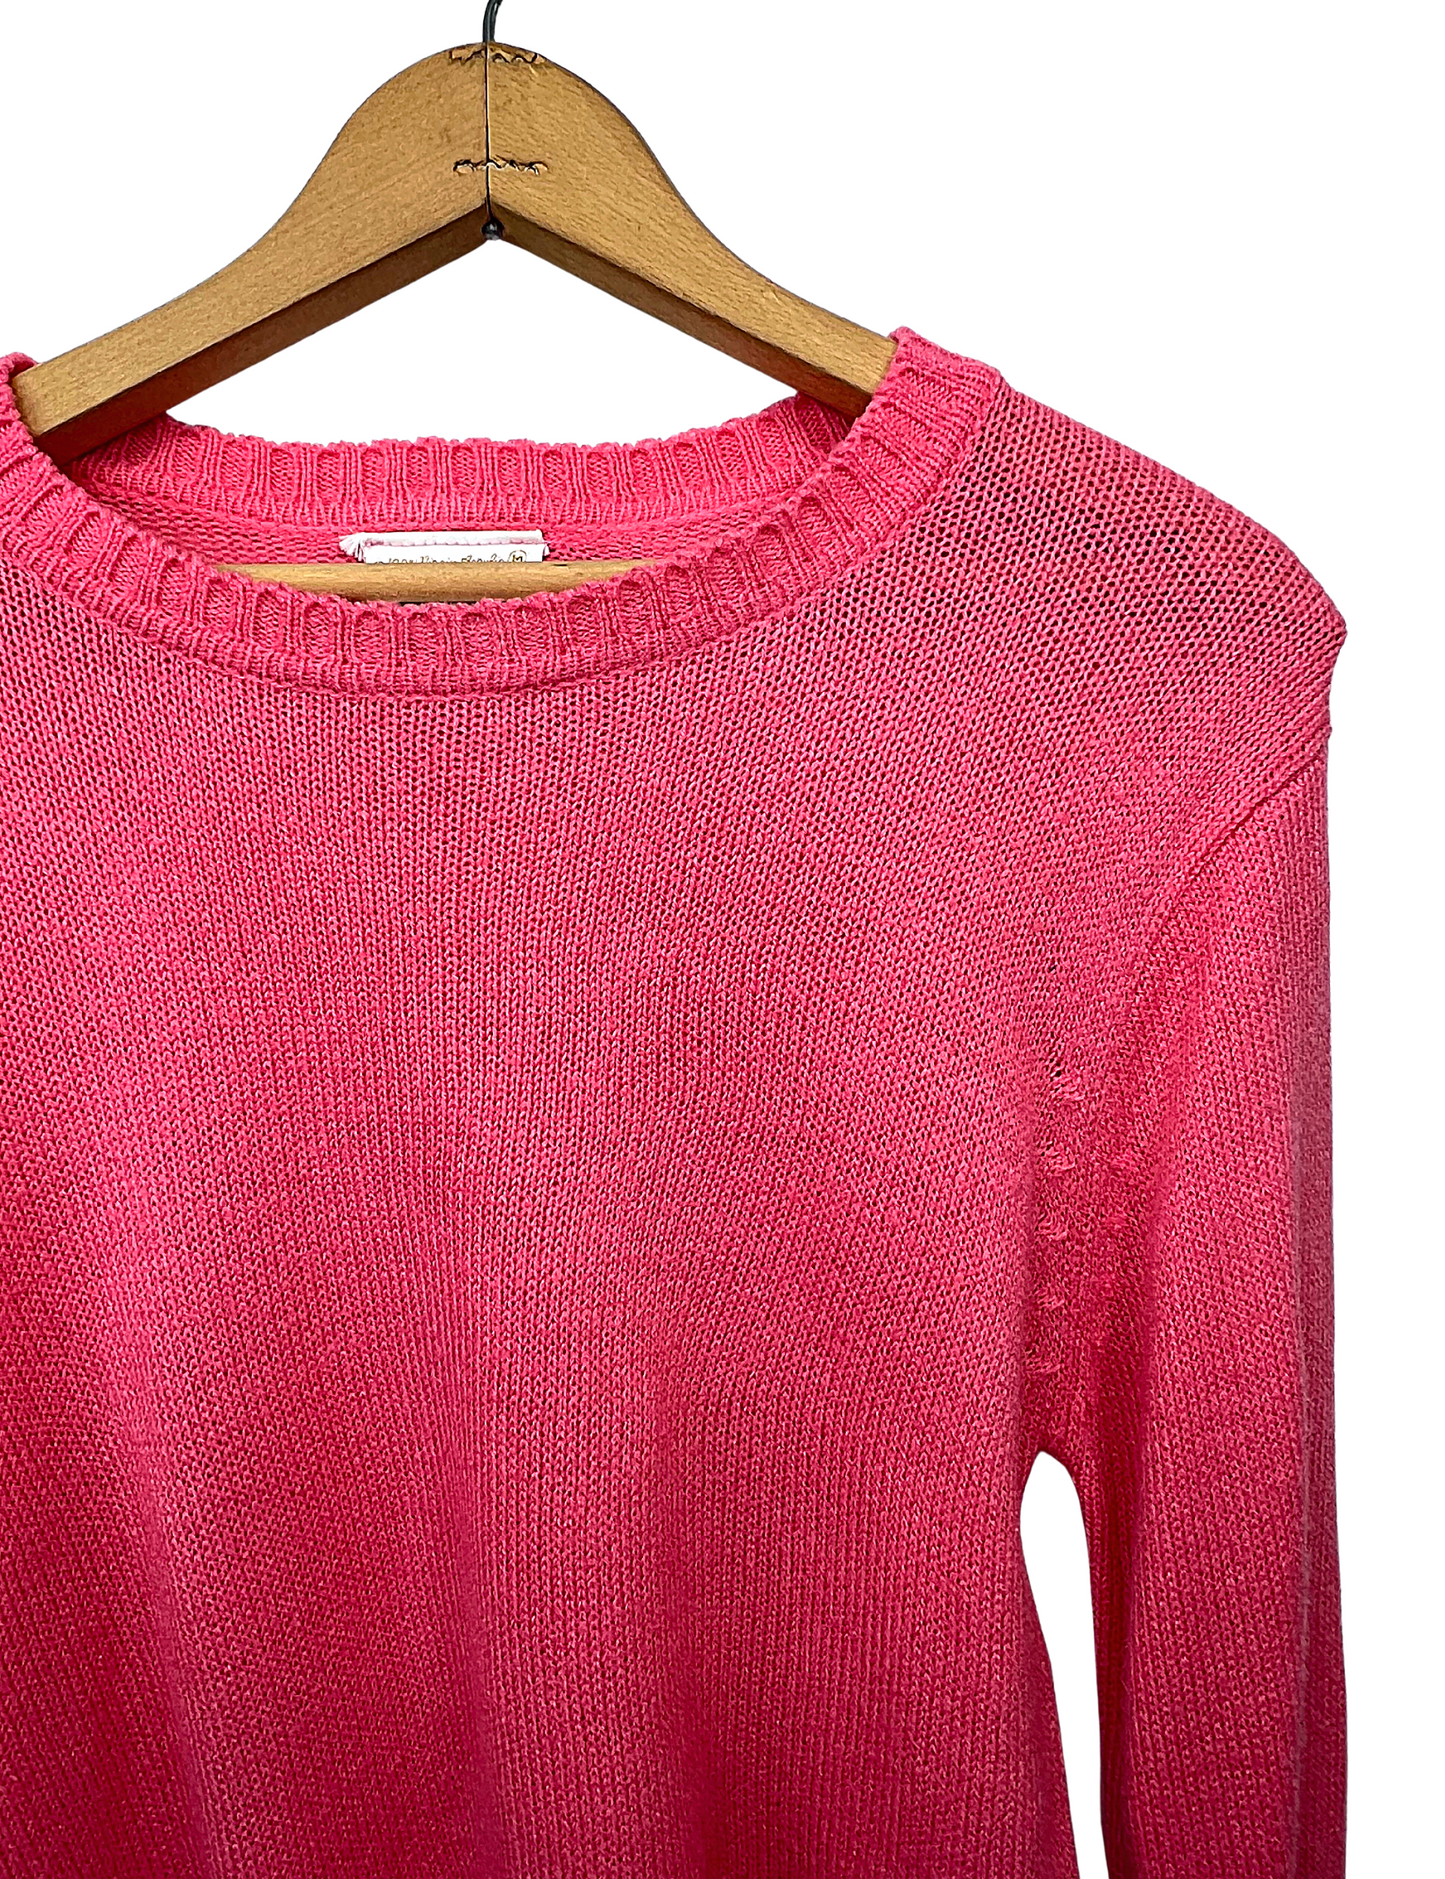 60’s Bubblegum Pink “Exclusive Imports” Scoop Neck Knit Sweater Wms Size S/M